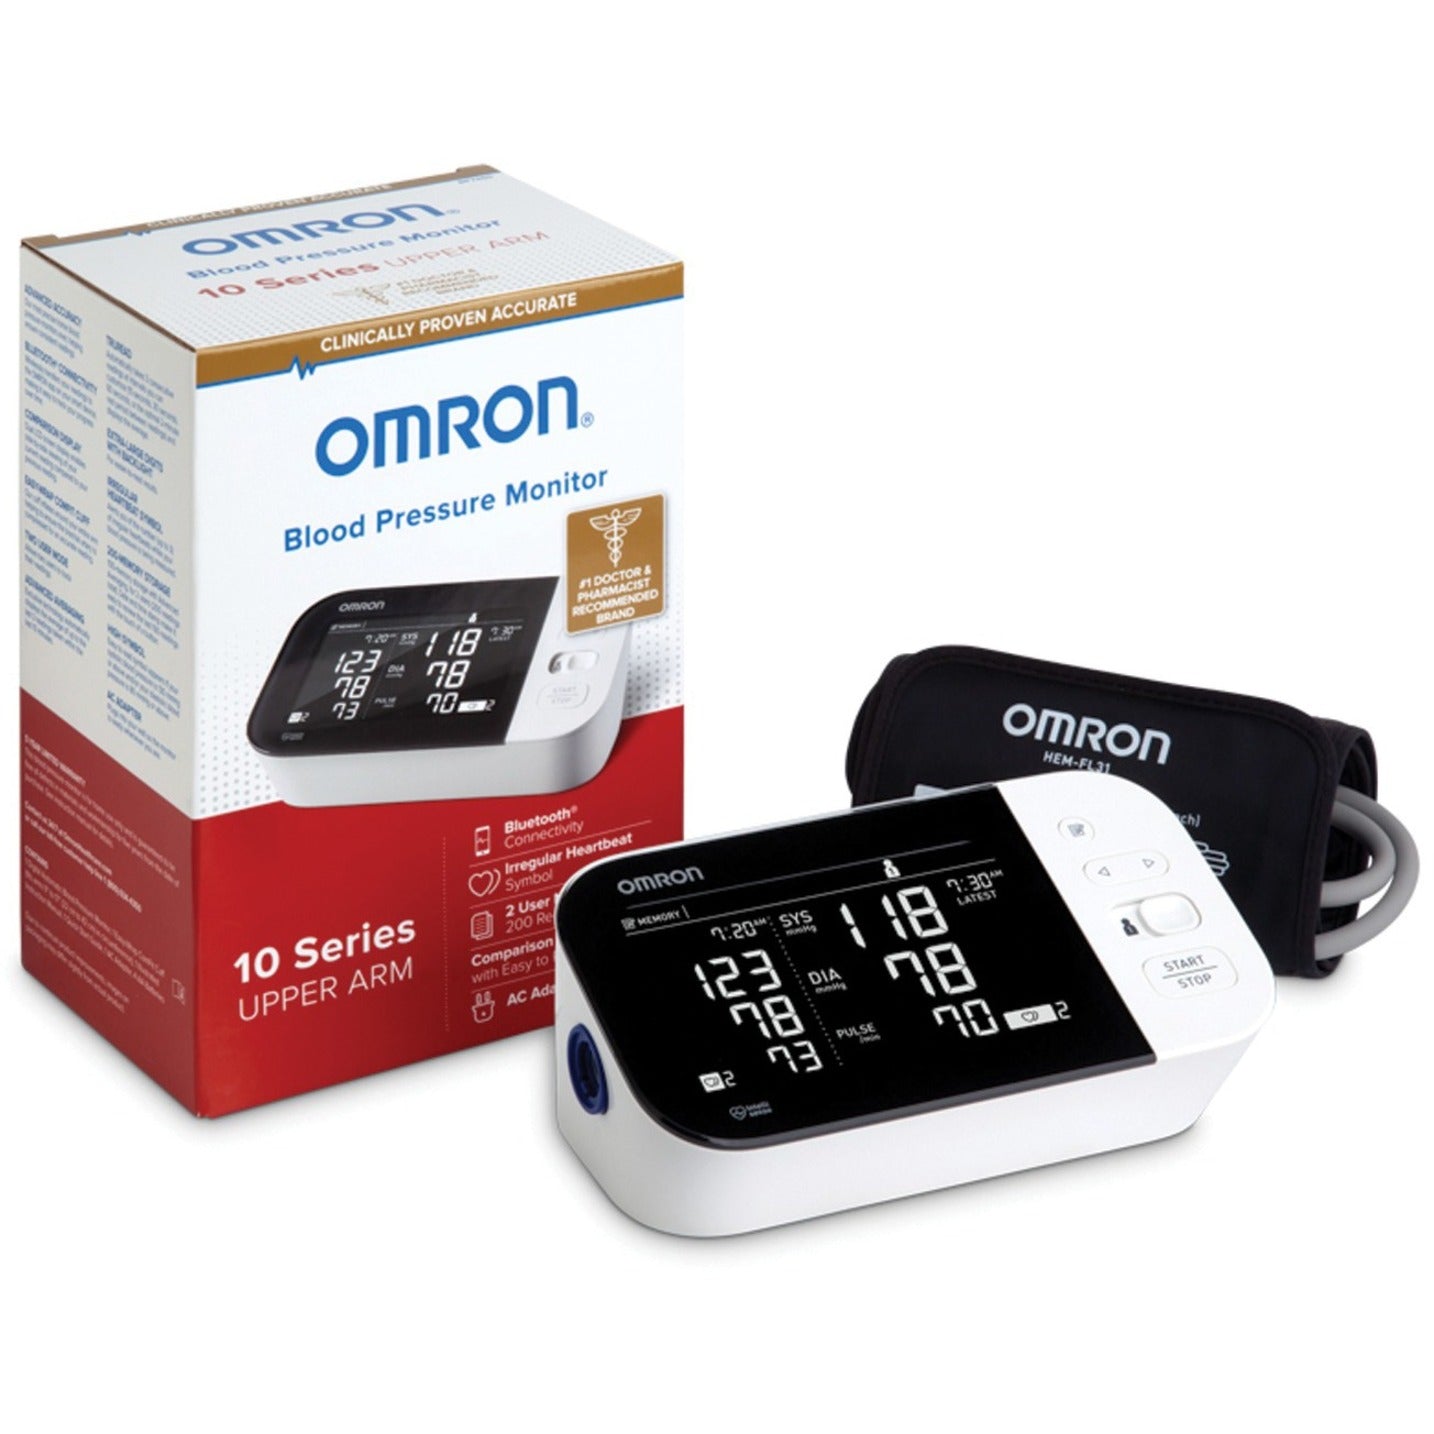 Omron BP7450 10 Series Wireless Upper Arm Blood Pressure Monitor, Memory Storage, Backlit Digital Display, Irregular Heartbeat Detection